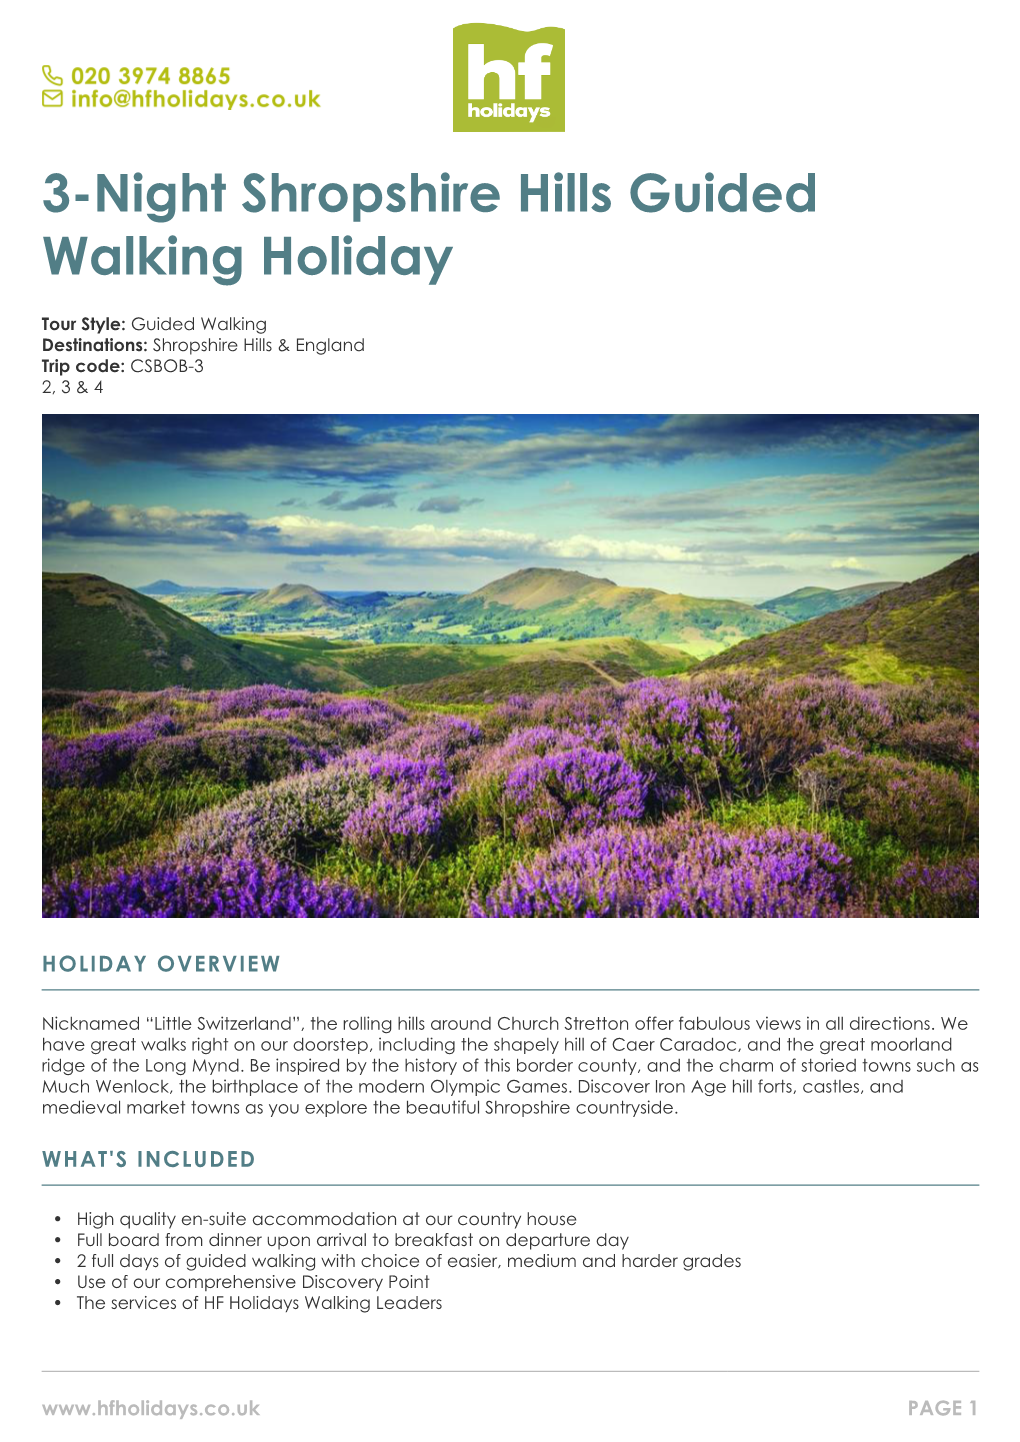 3-Night Shropshire Hills Guided Walking Holiday